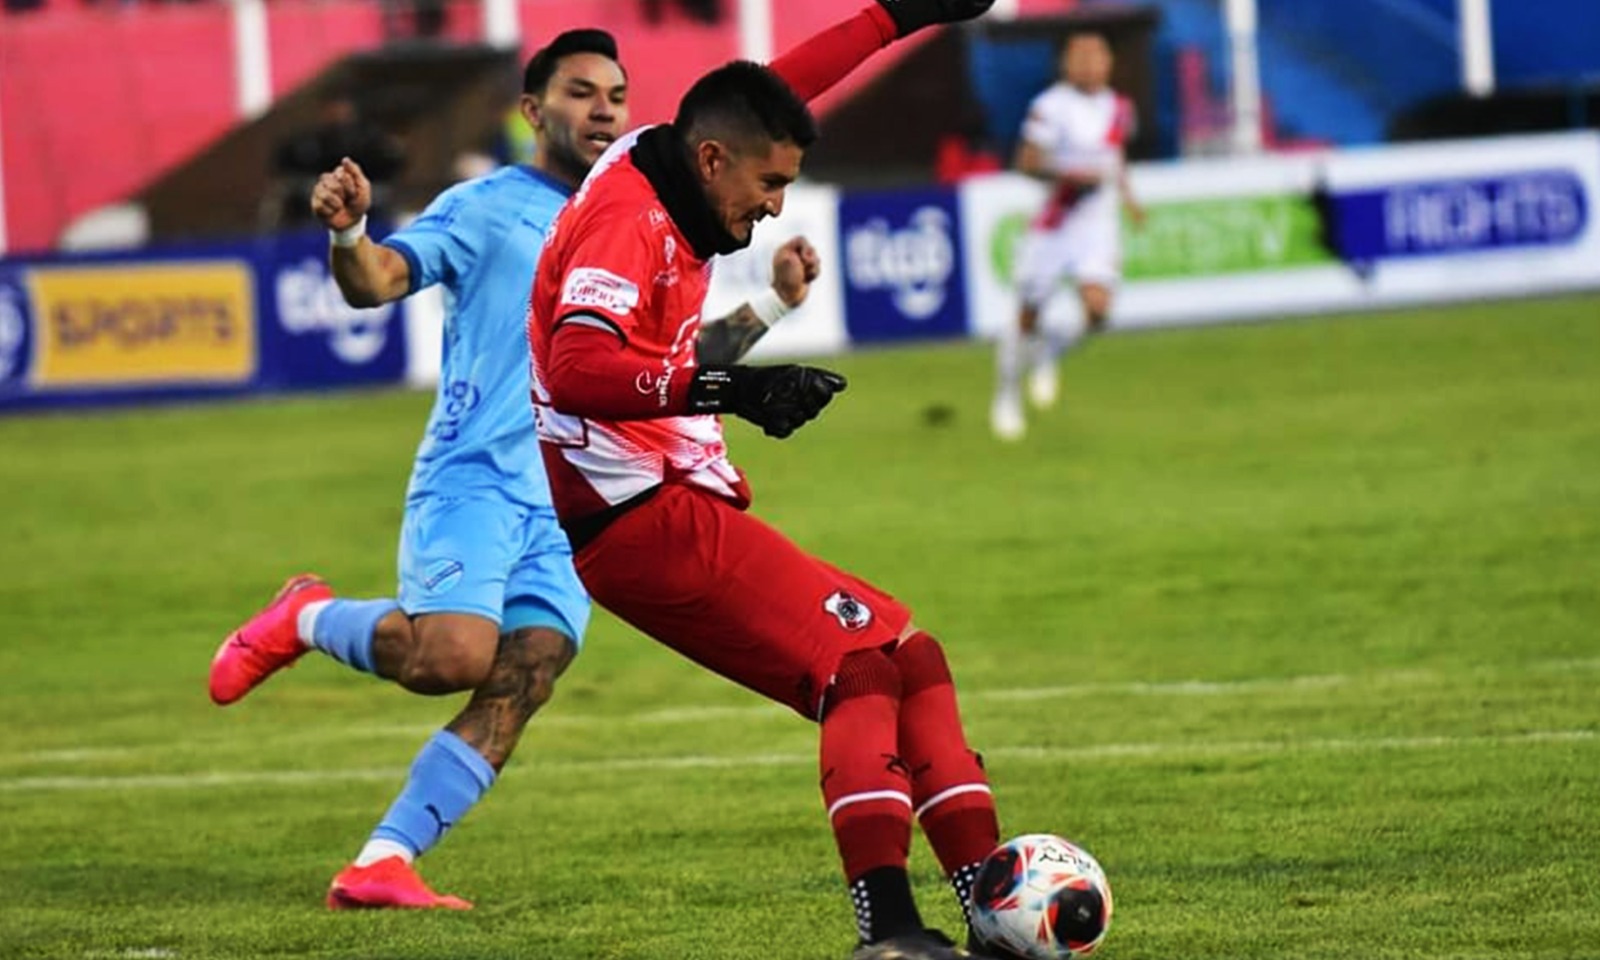 Always Ready va a Perú para sostener la ventaja contra Sporting Cristal